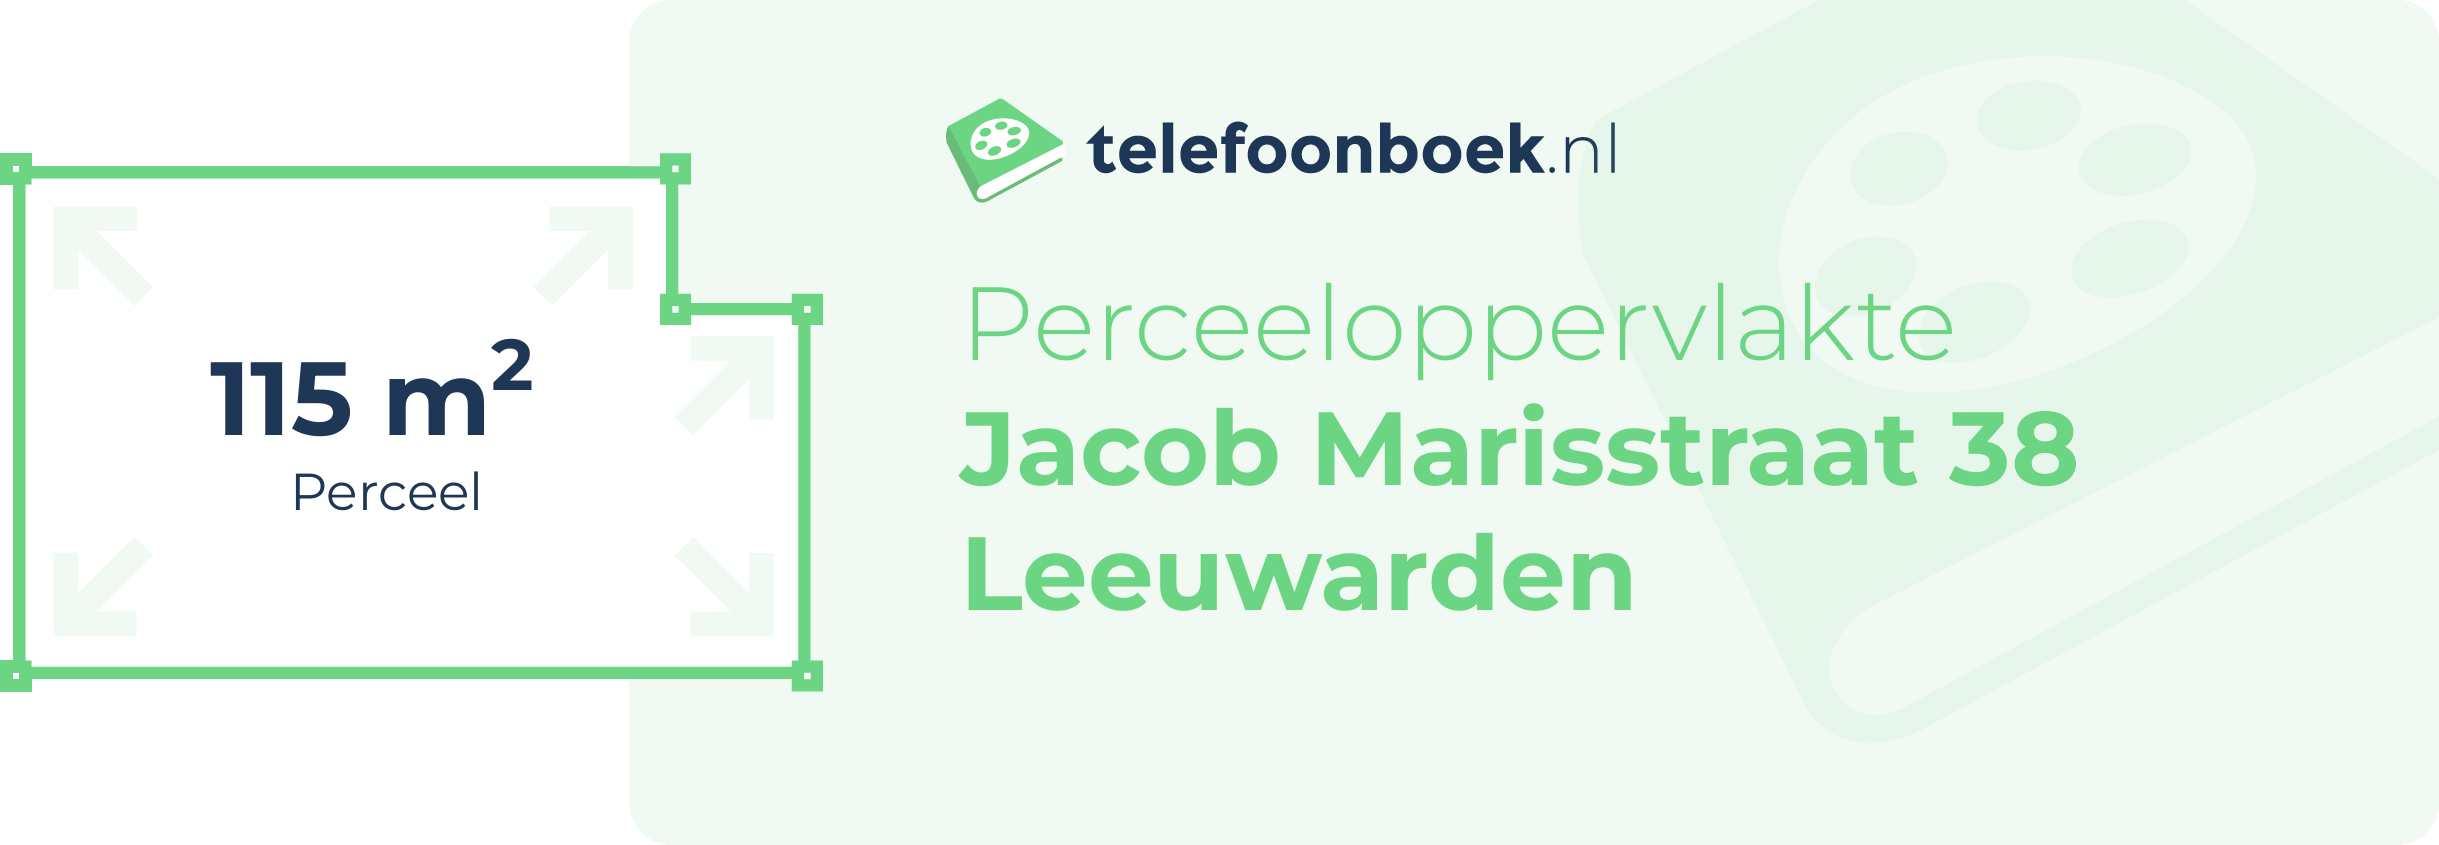 Perceeloppervlakte Jacob Marisstraat 38 Leeuwarden